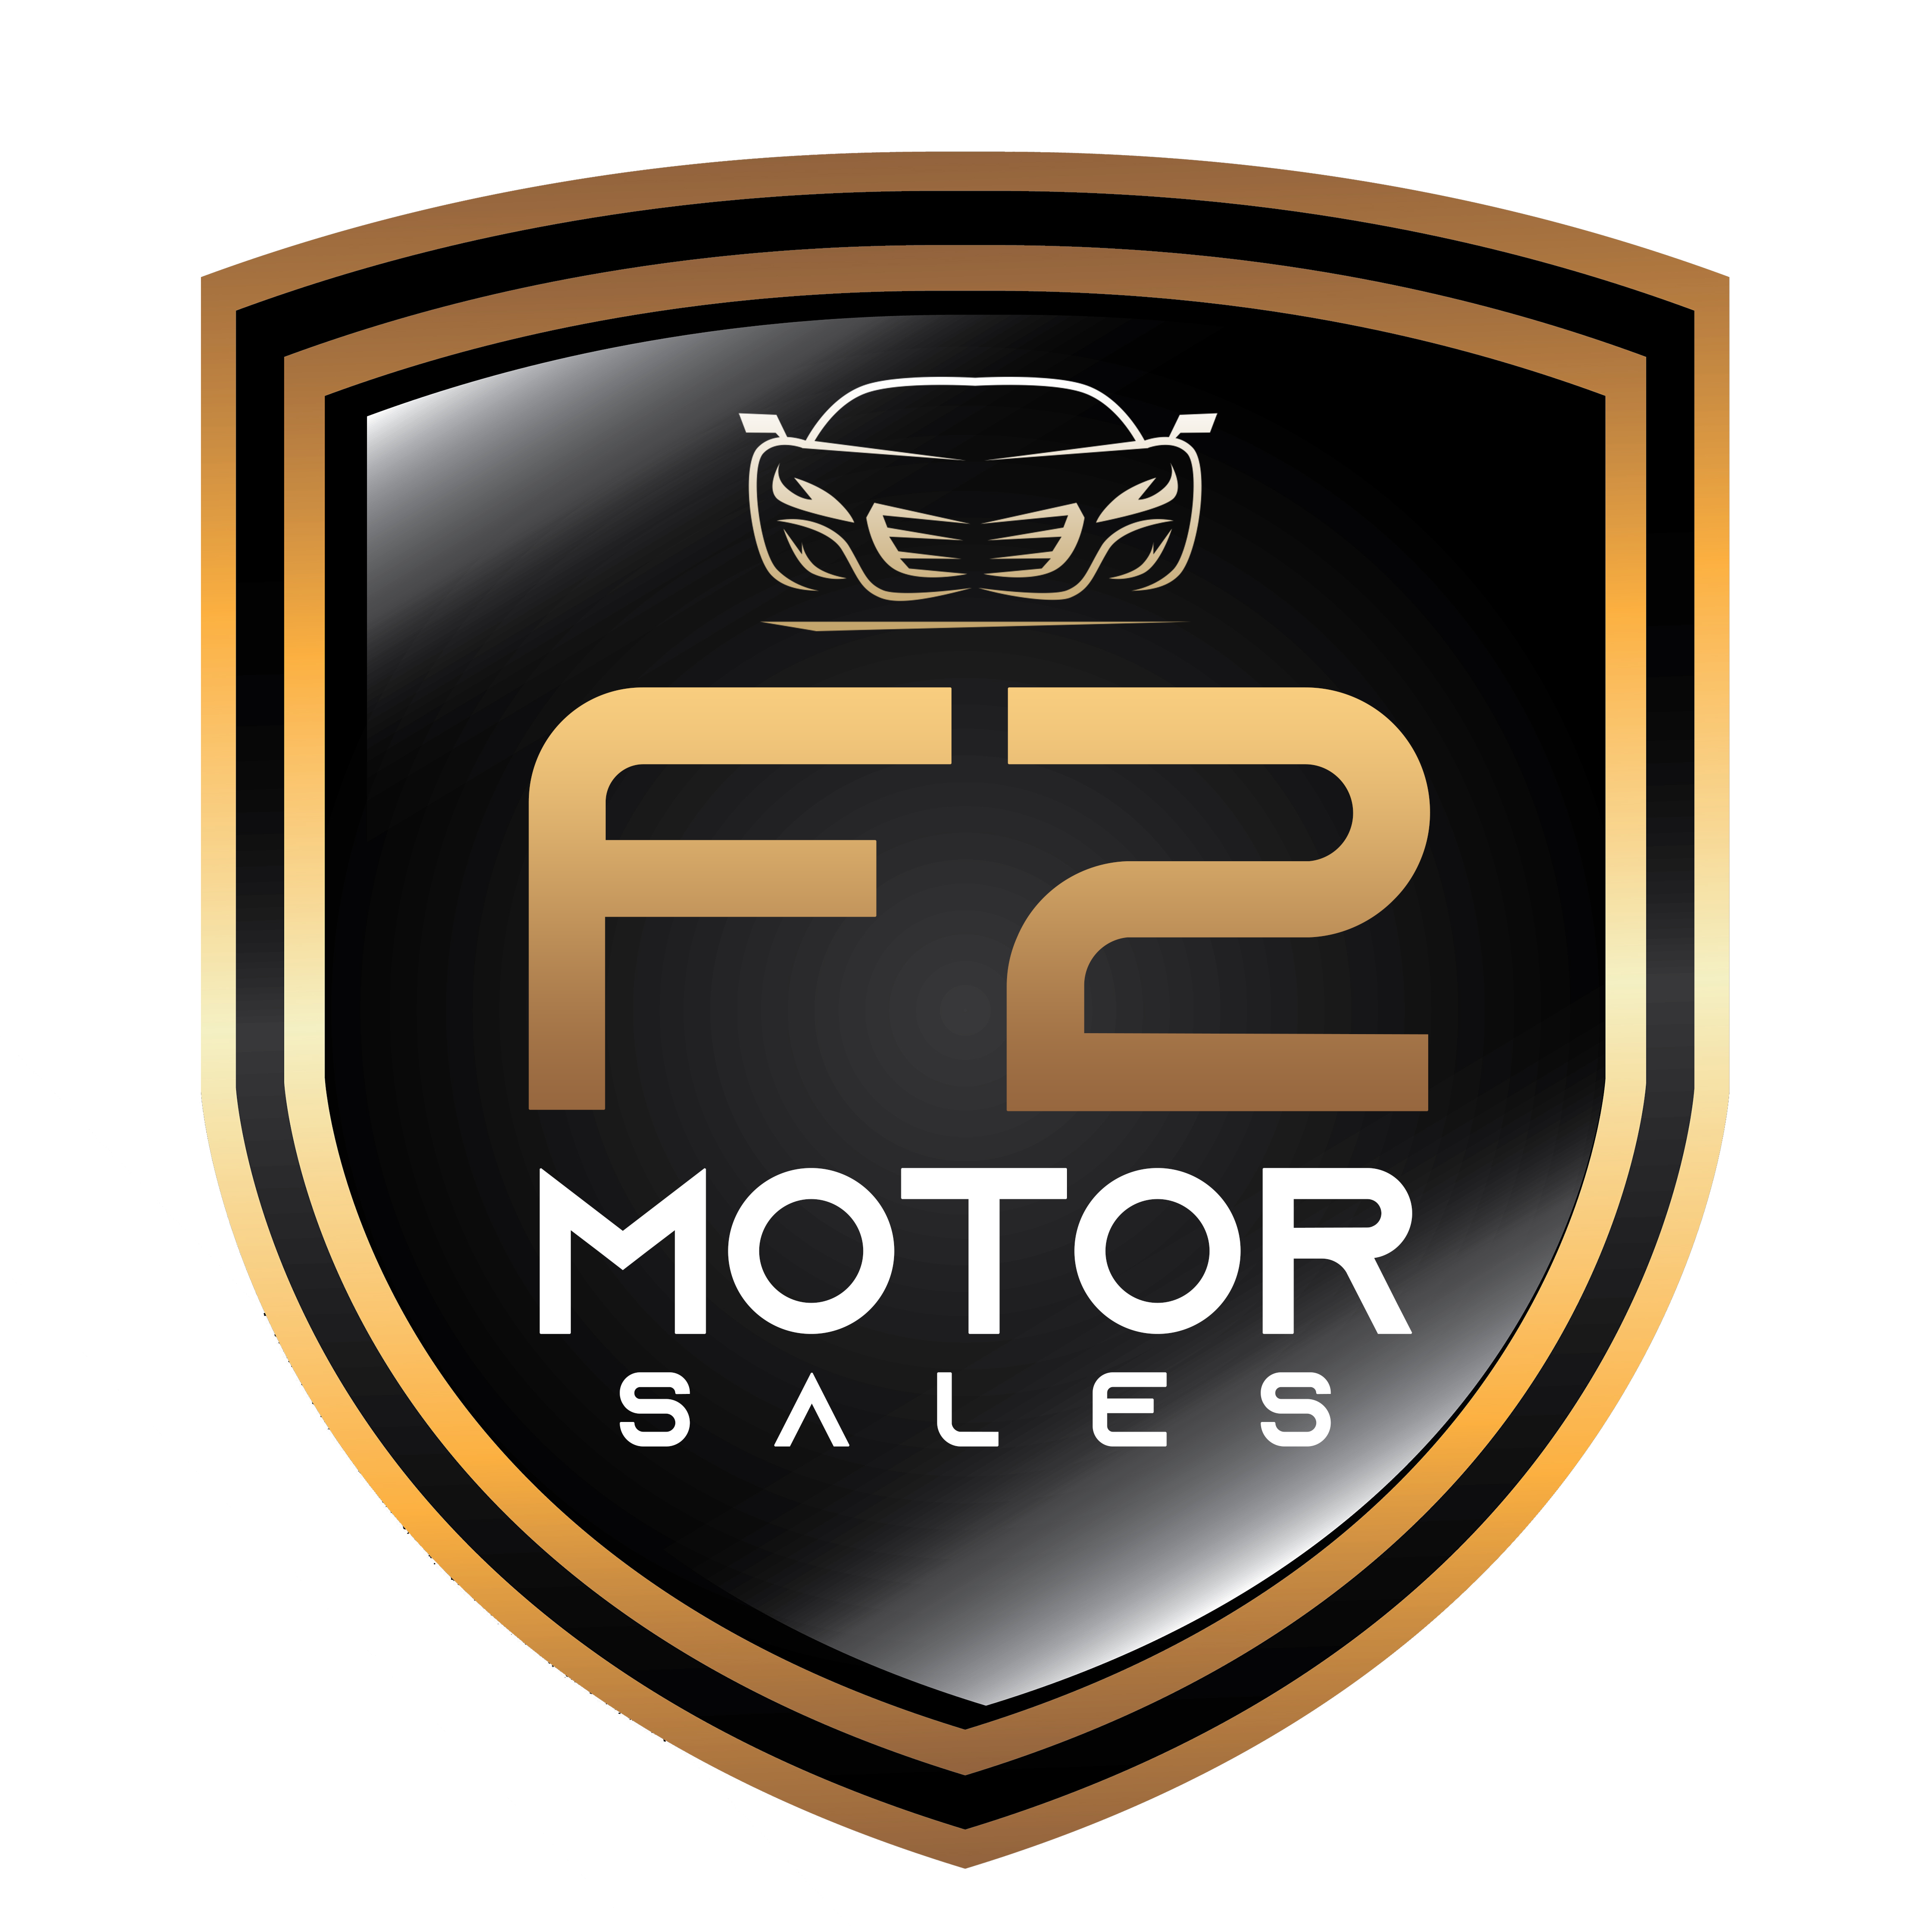 F2 Motor Sales